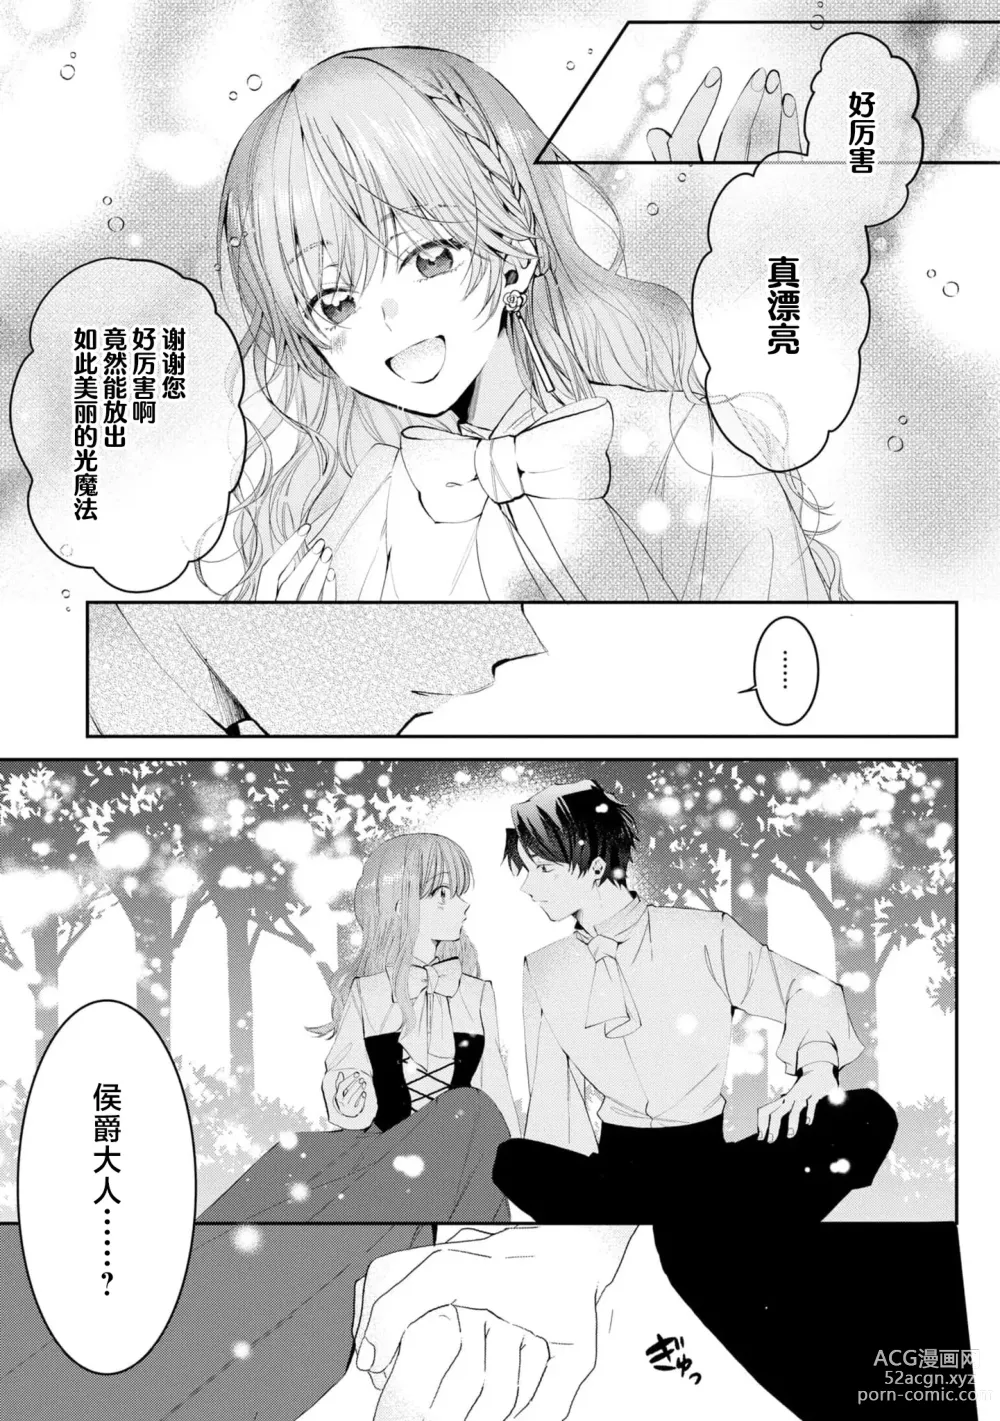 Page 19 of manga 侯爵大人被戏称『机器人』直到变成模范丈夫